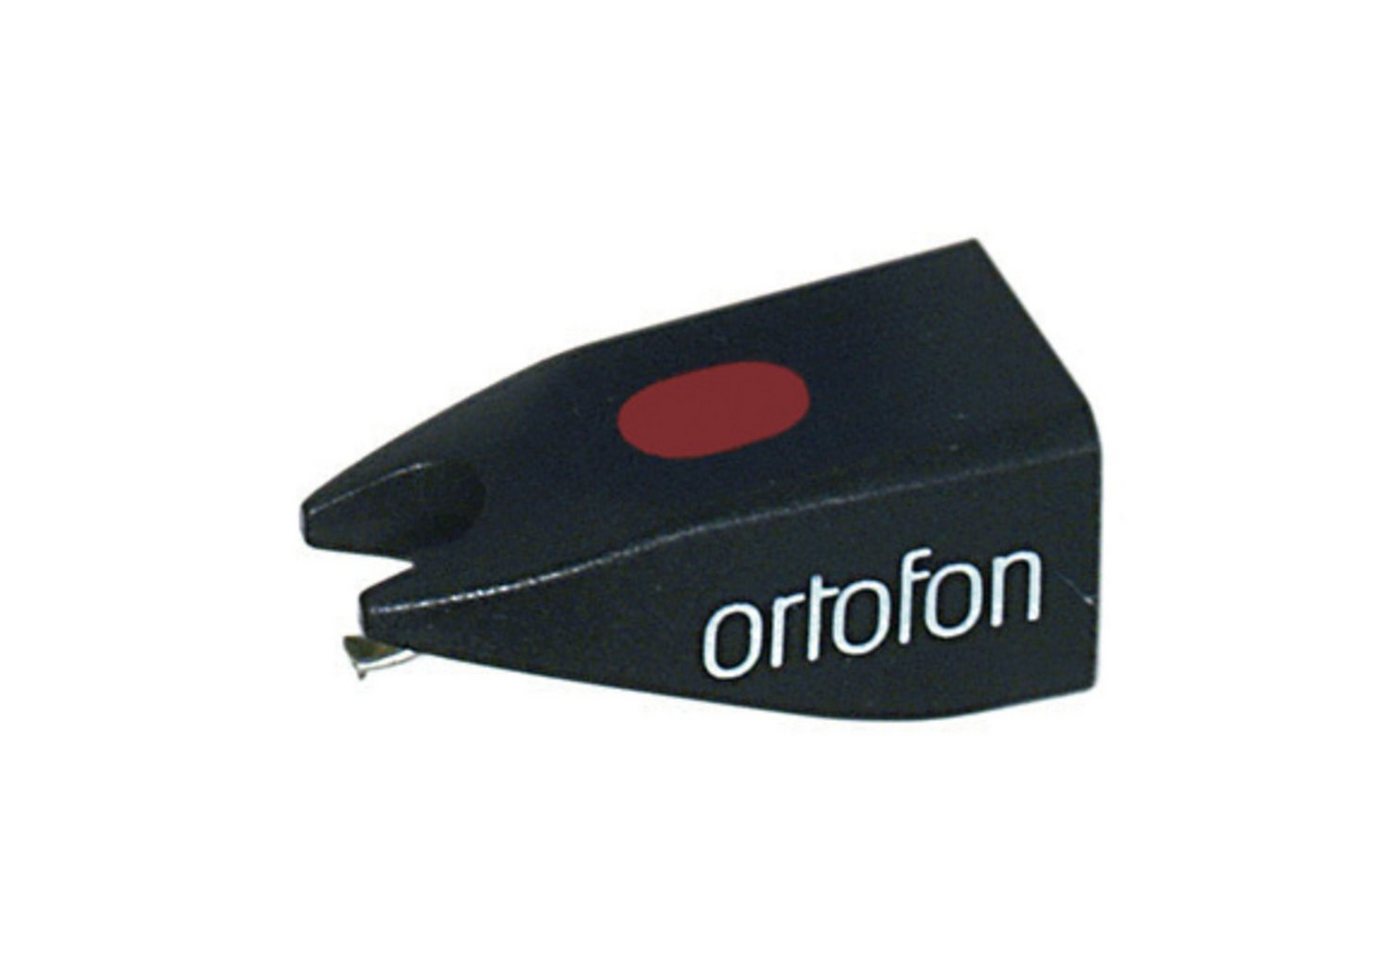 ortofon Tonabnehmer, (Ersatznadel Pro S, Tonabnehmer-Systeme, Headshell-Systeme), Ersatznadel Pro S - Headshell Tonabnehmer System von ortofon